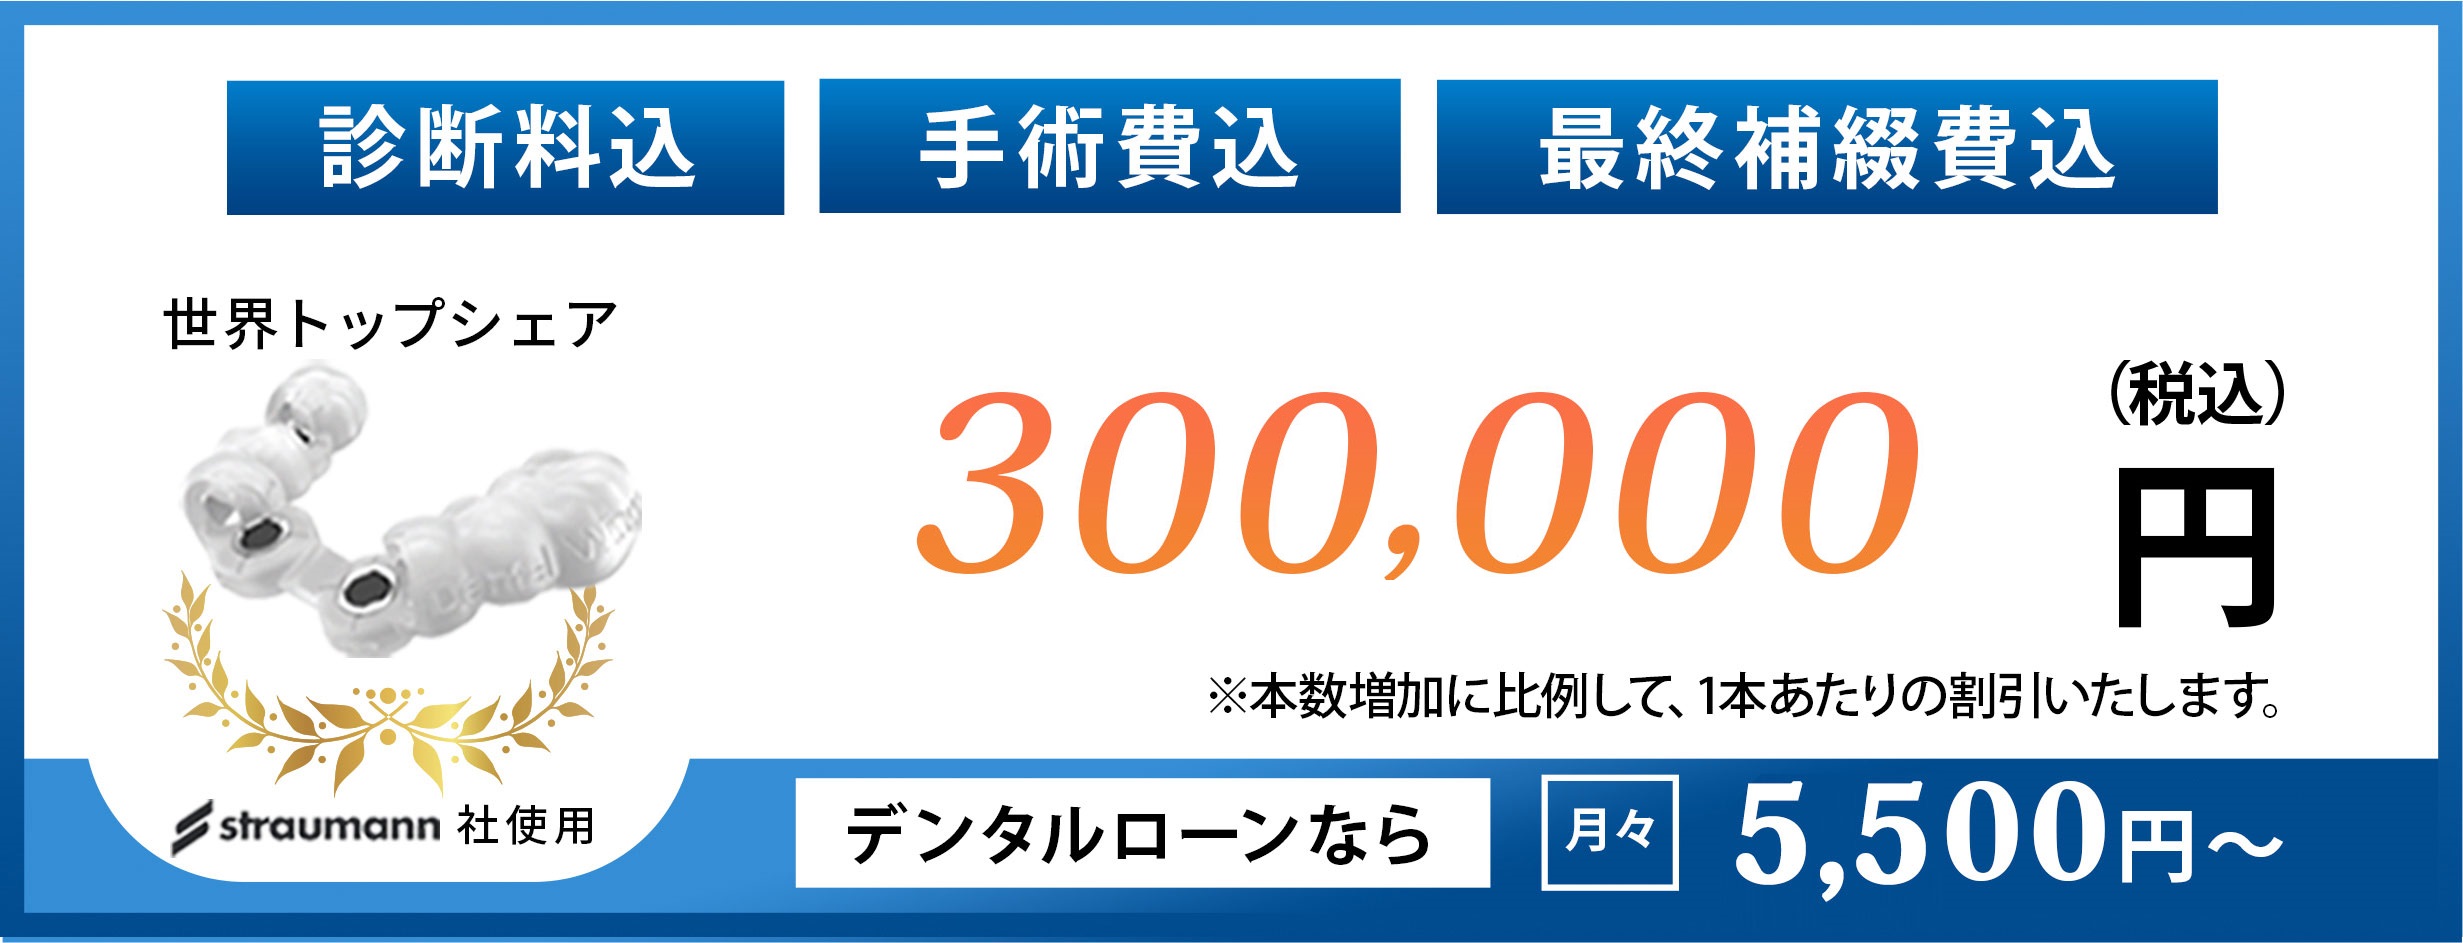 400,000円